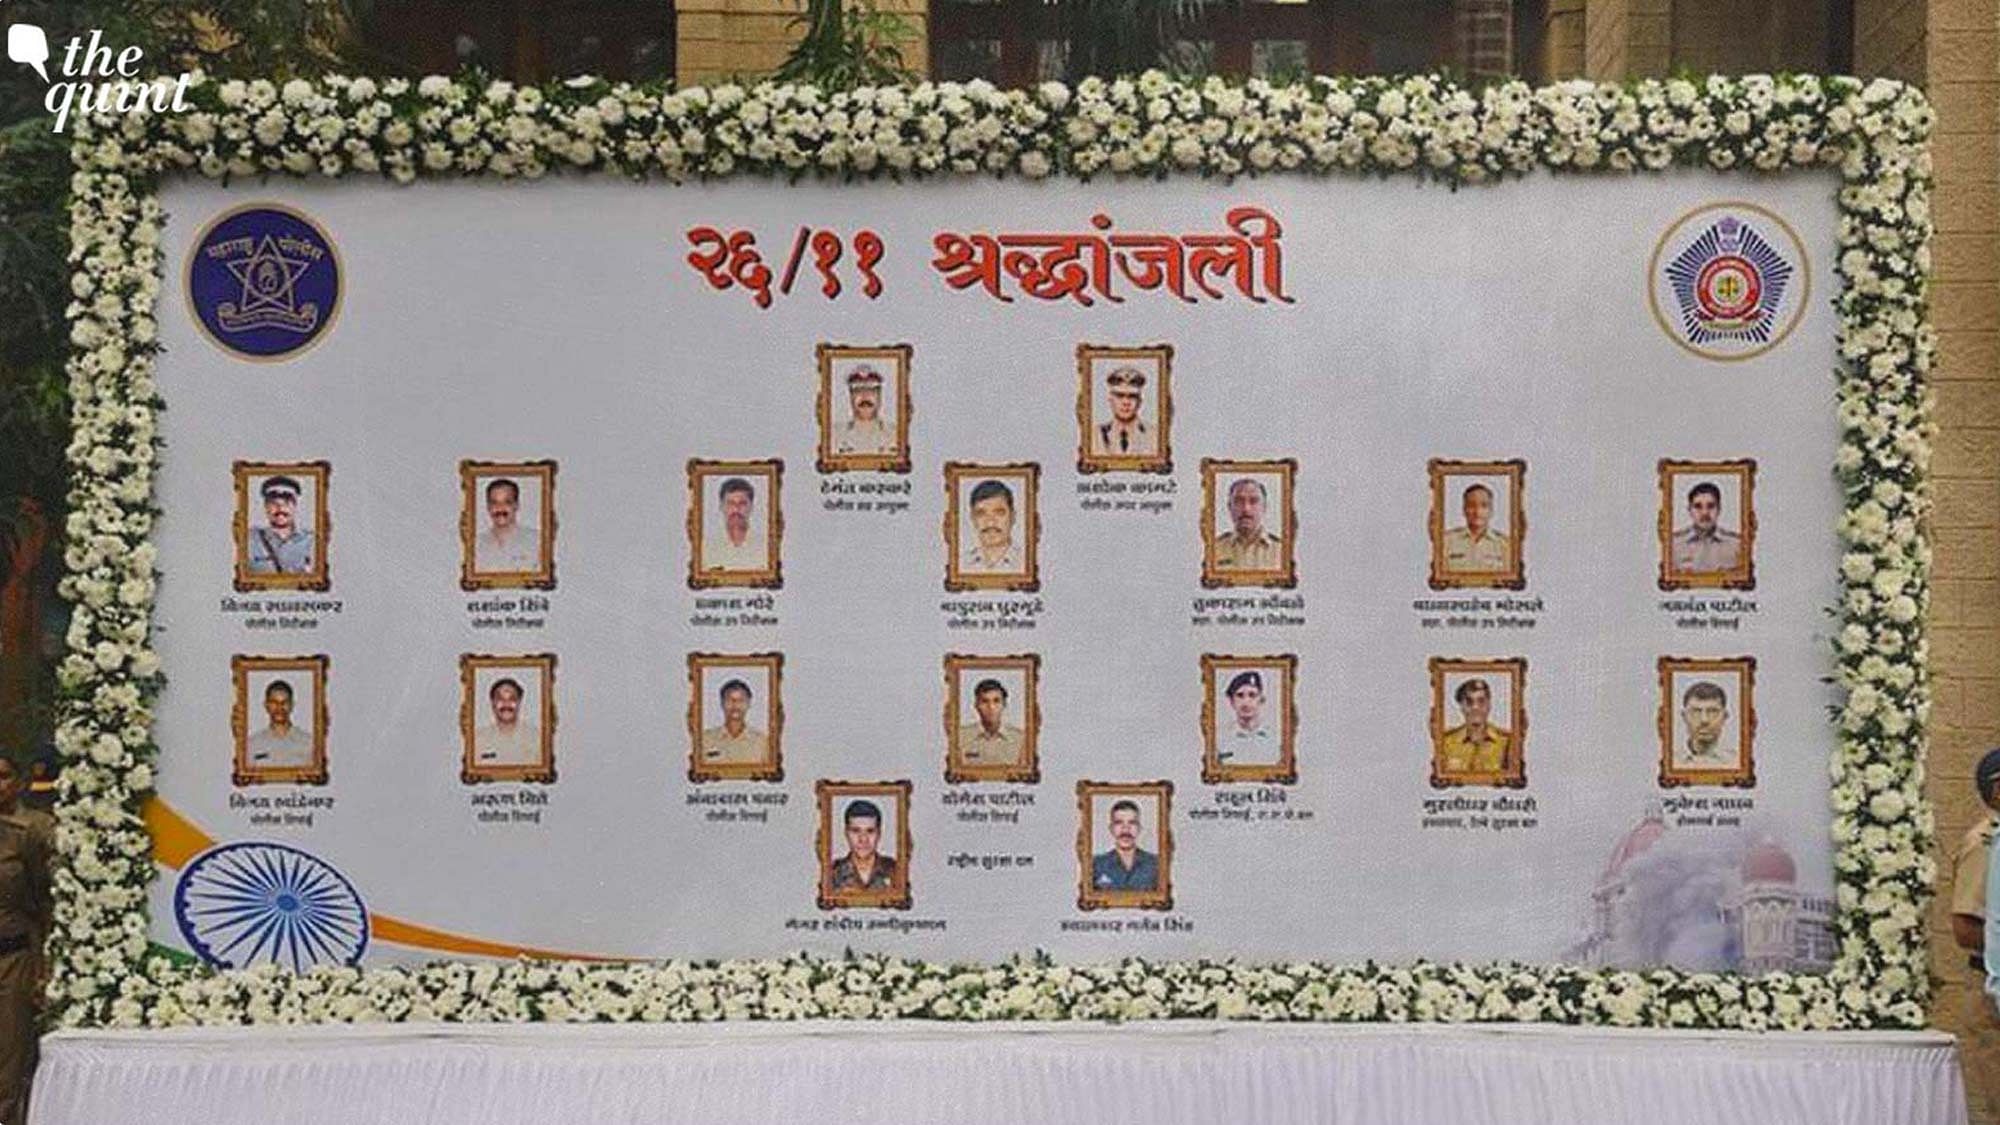 <div class="paragraphs"><p>Tribute to martyrs of Mumbai attacks.</p></div>